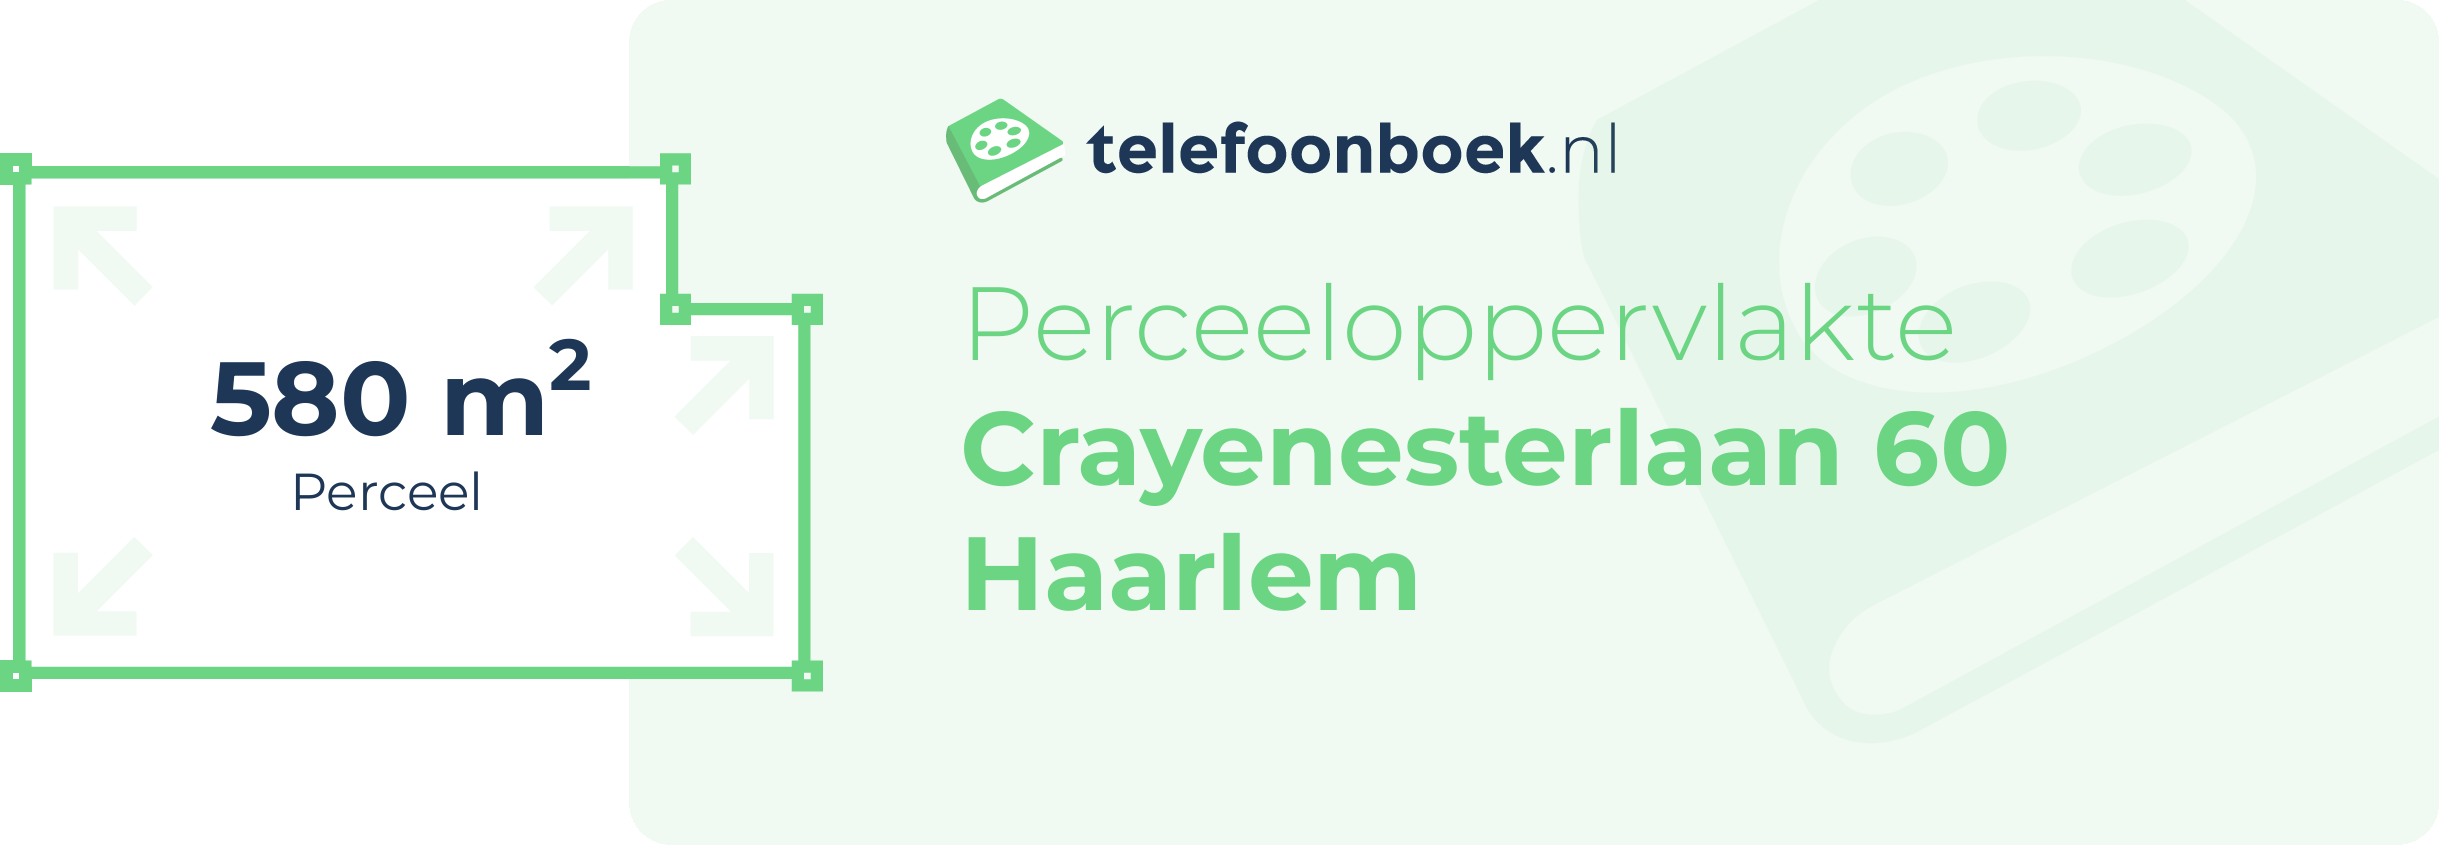 Perceeloppervlakte Crayenesterlaan 60 Haarlem